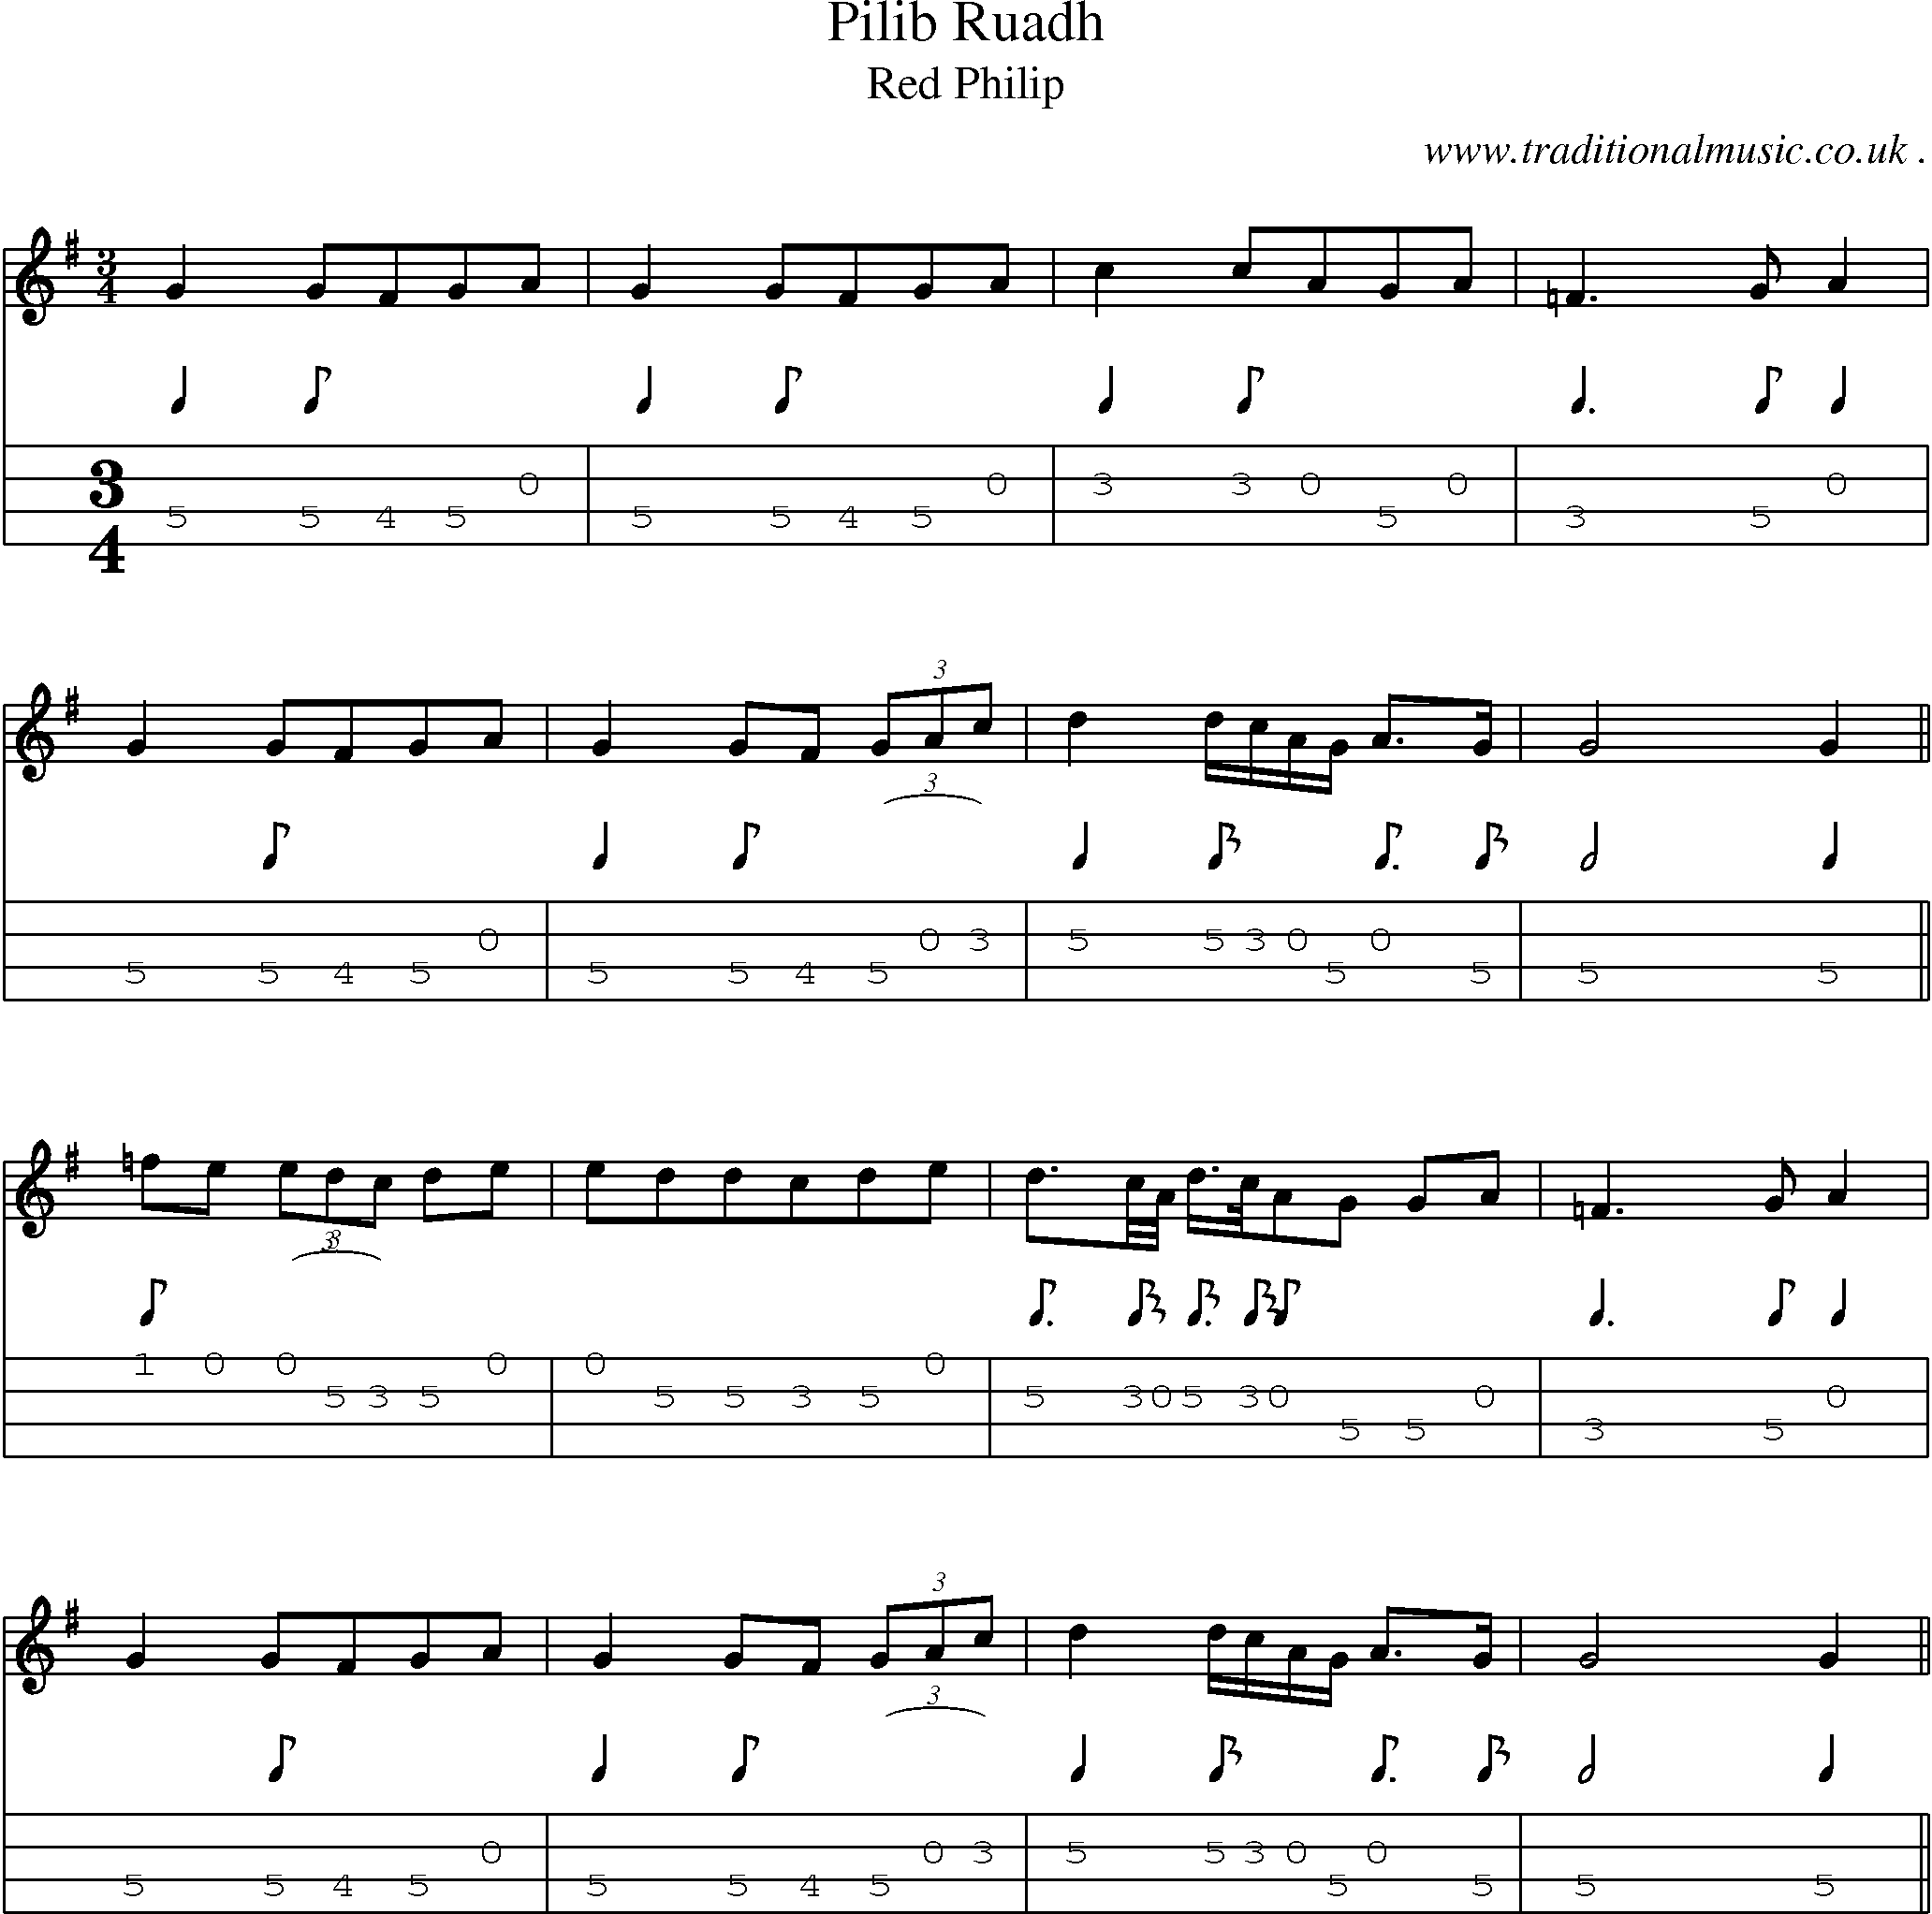 Sheet-Music and Mandolin Tabs for Pilib Ruadh